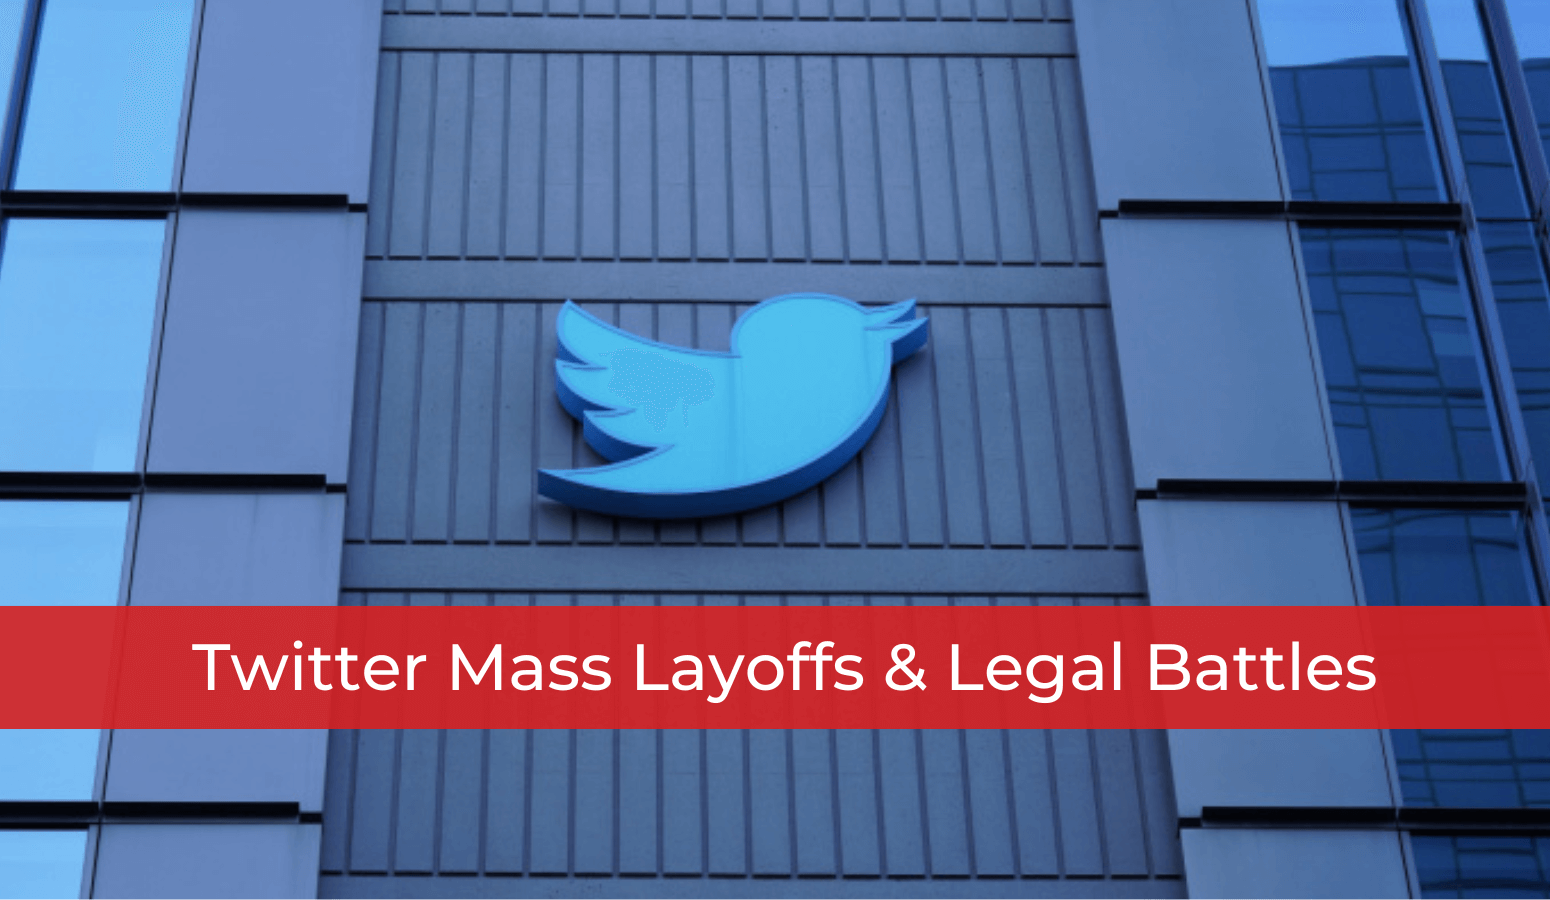 Featured image for “Twitter Mass Layoffs & Legal Battles”